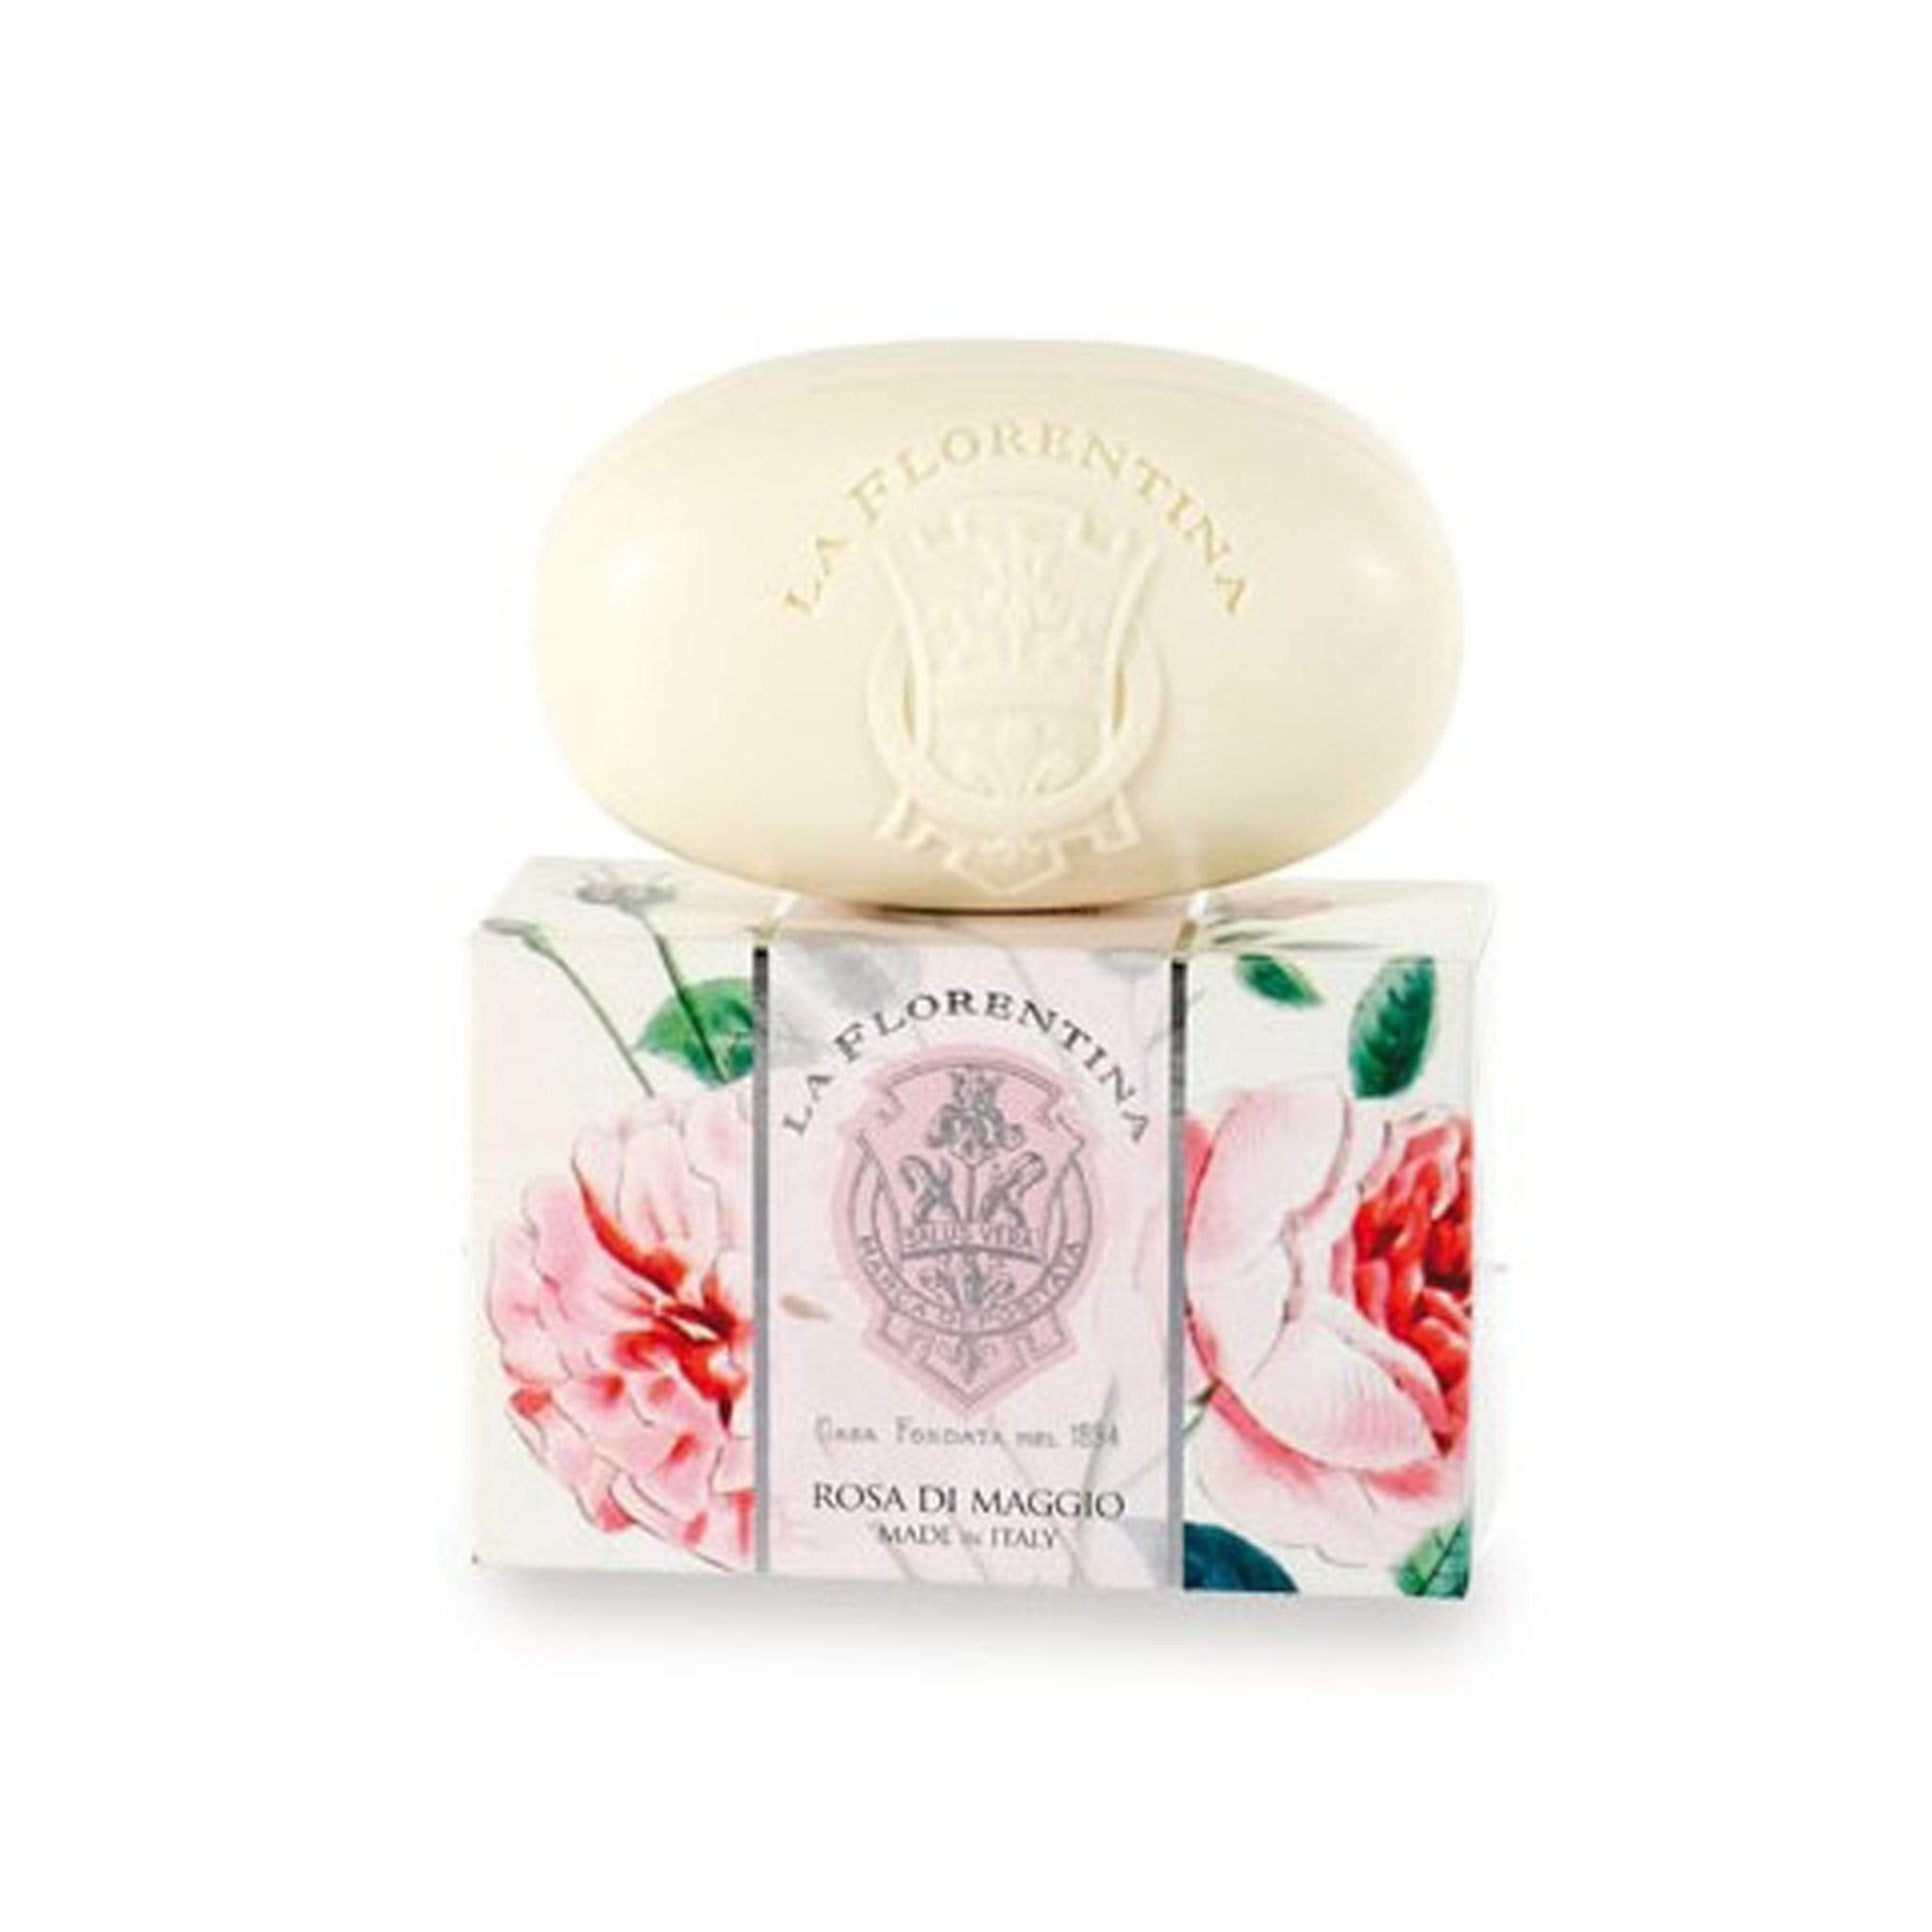 Italian Luxury Group 300g Bar Soap Gift Boxed La Florentina Set of 6 Mixed Bars Soap 300 g Brand